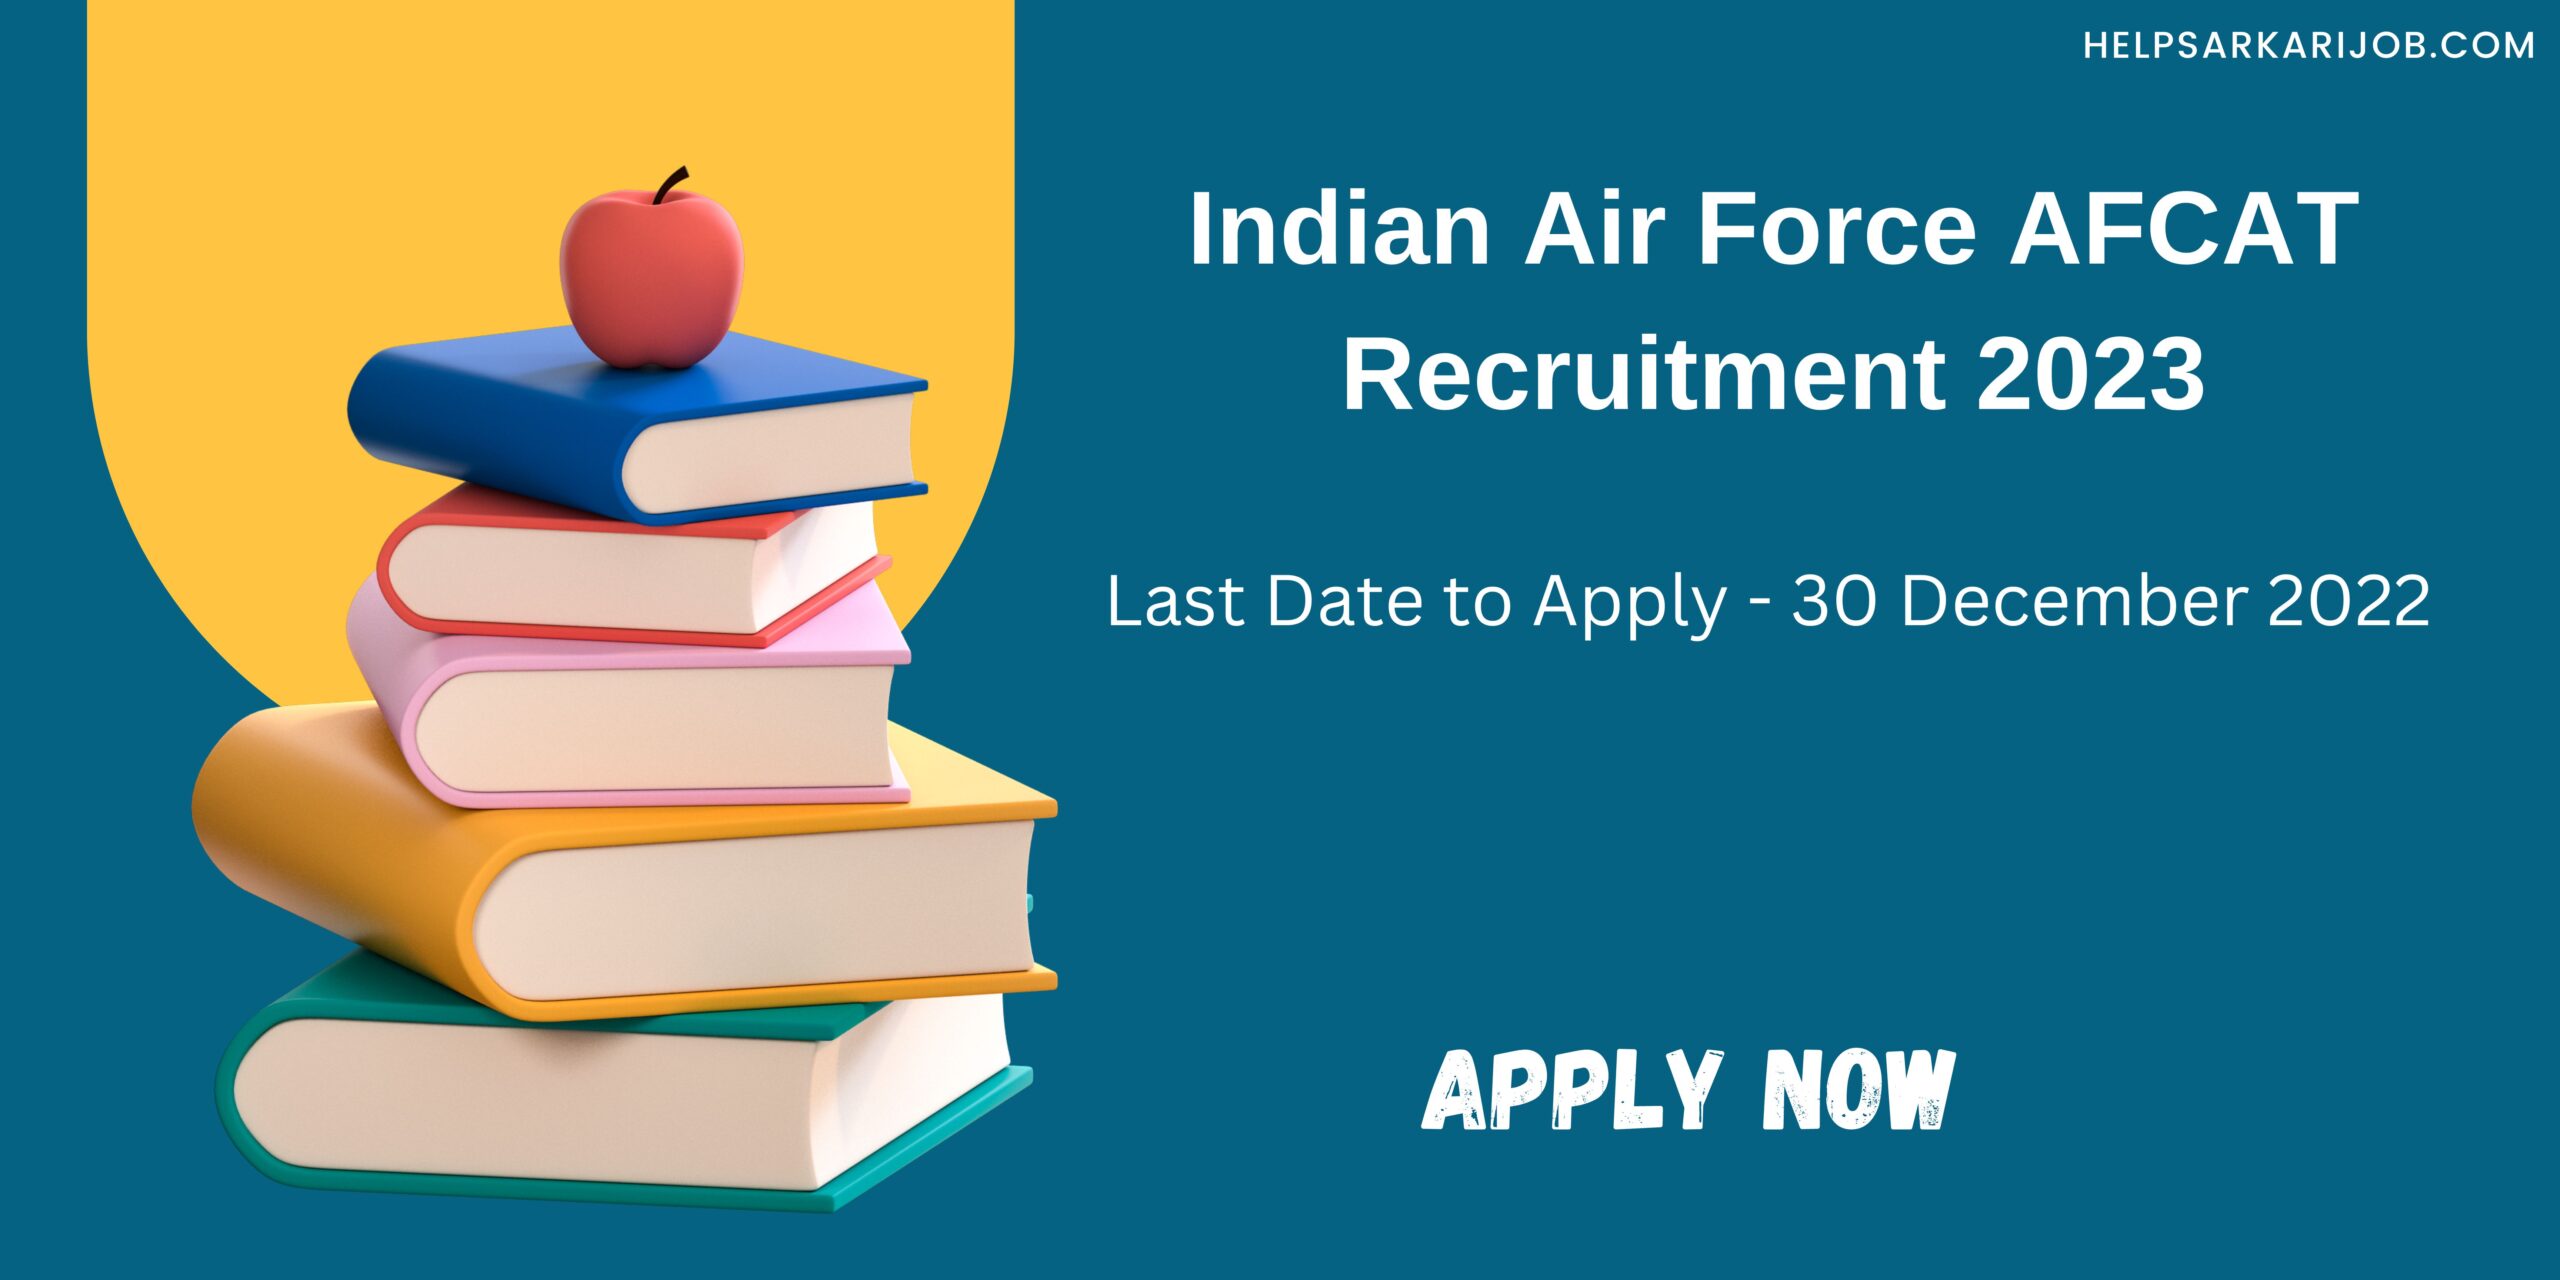 Indian Air Force AFCAT Recruitment 2023 Last date